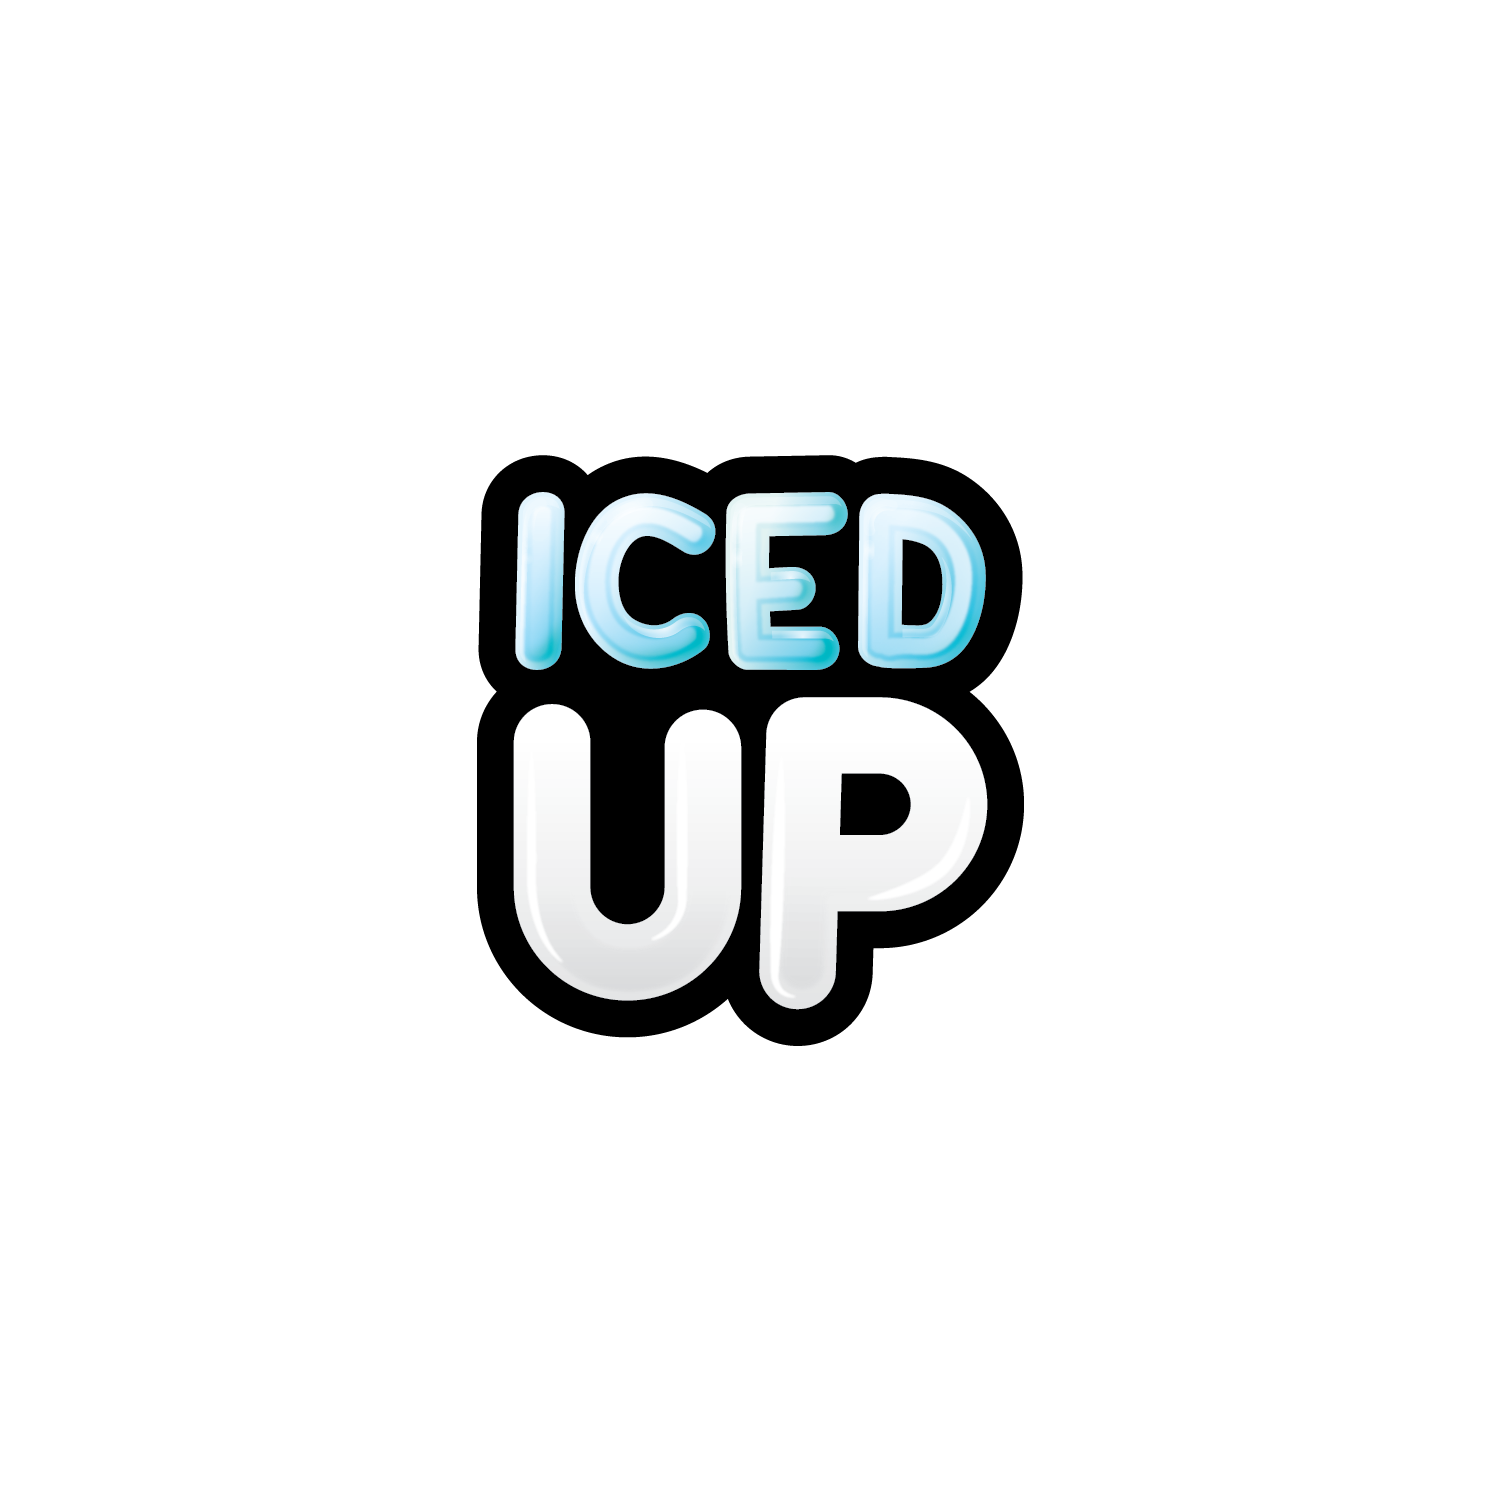 Iced Up(2)